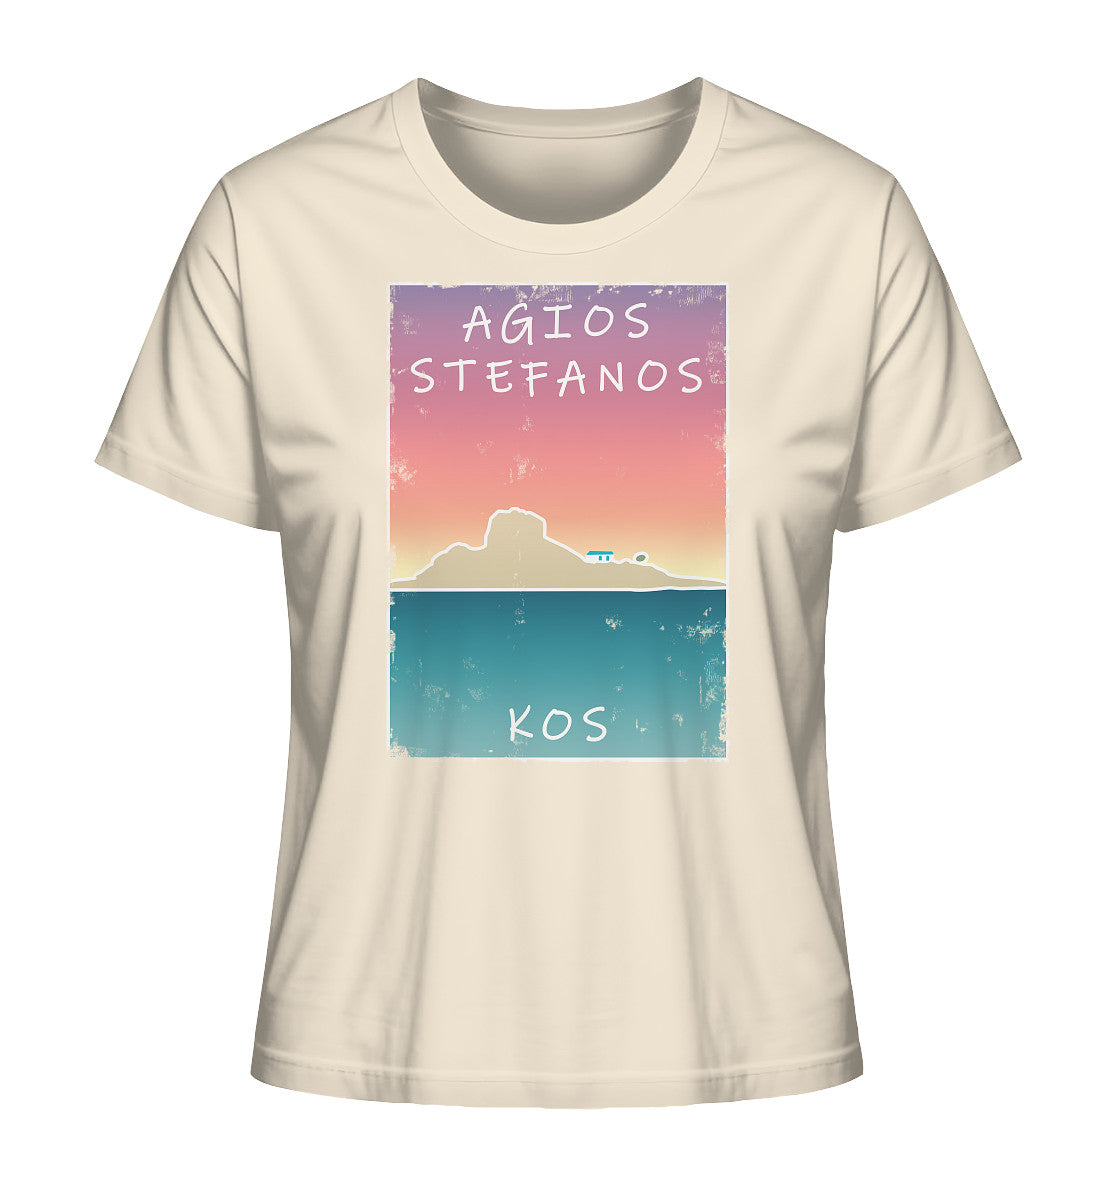 Agios Stefanos (Kastri) Kos - Ladies Organic Shirt